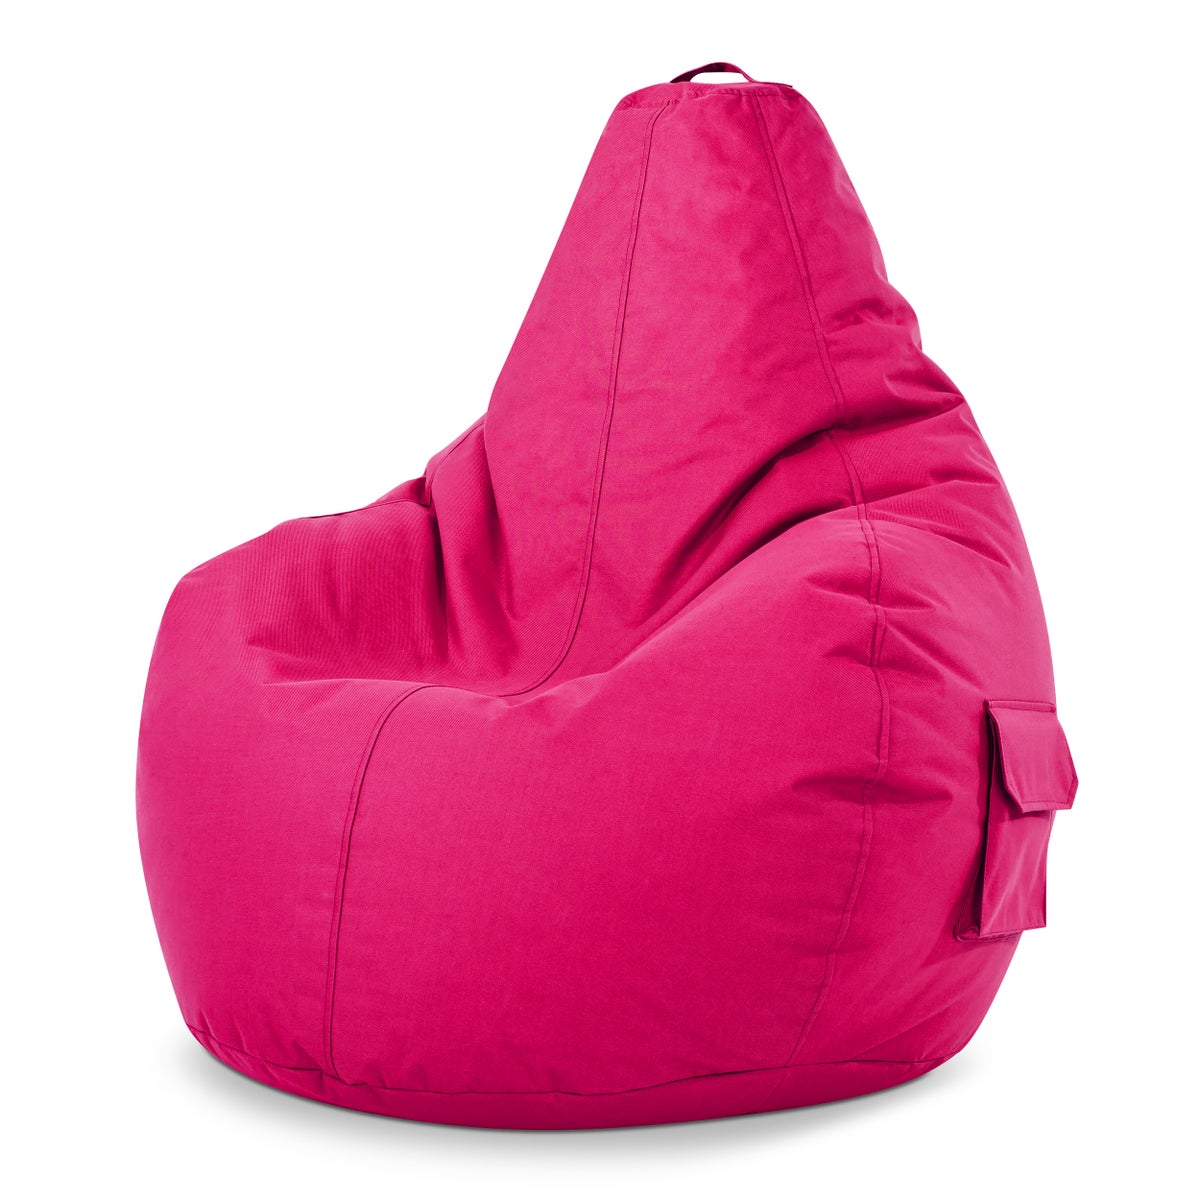 Green Bean© Sitzsack mit Rückenlehne 80x70x90cm - Gaming Chair mit 230L Füllung Kuschelig Weich Waschbar - Bean Bag Bodenkissen Lounge Chair Sitzhocker Relax-Sessel Gamer Gamingstuhl Pink